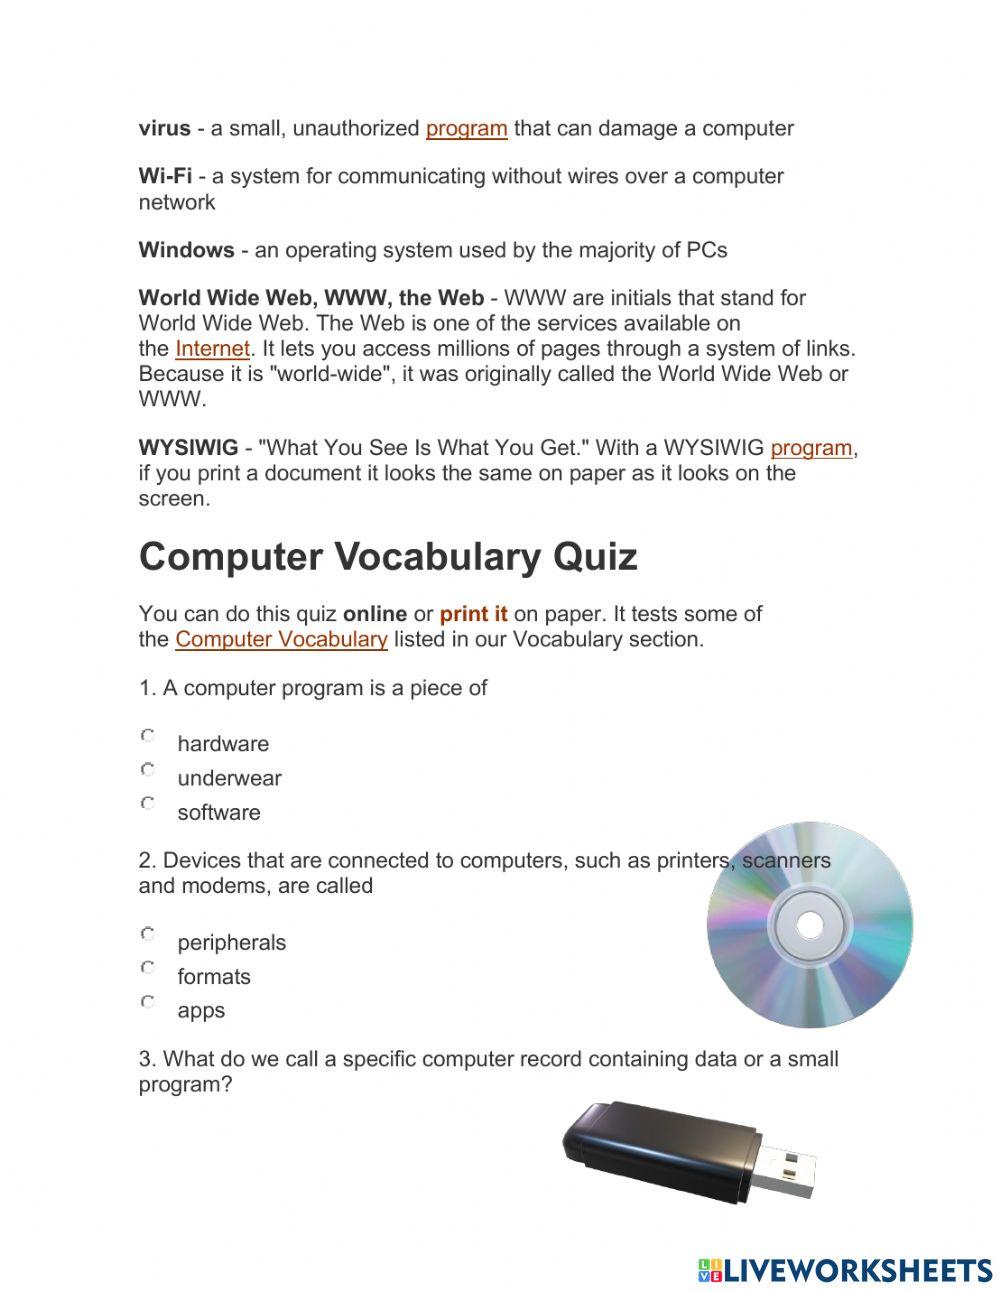 Computer's Vocabulary and Quiz